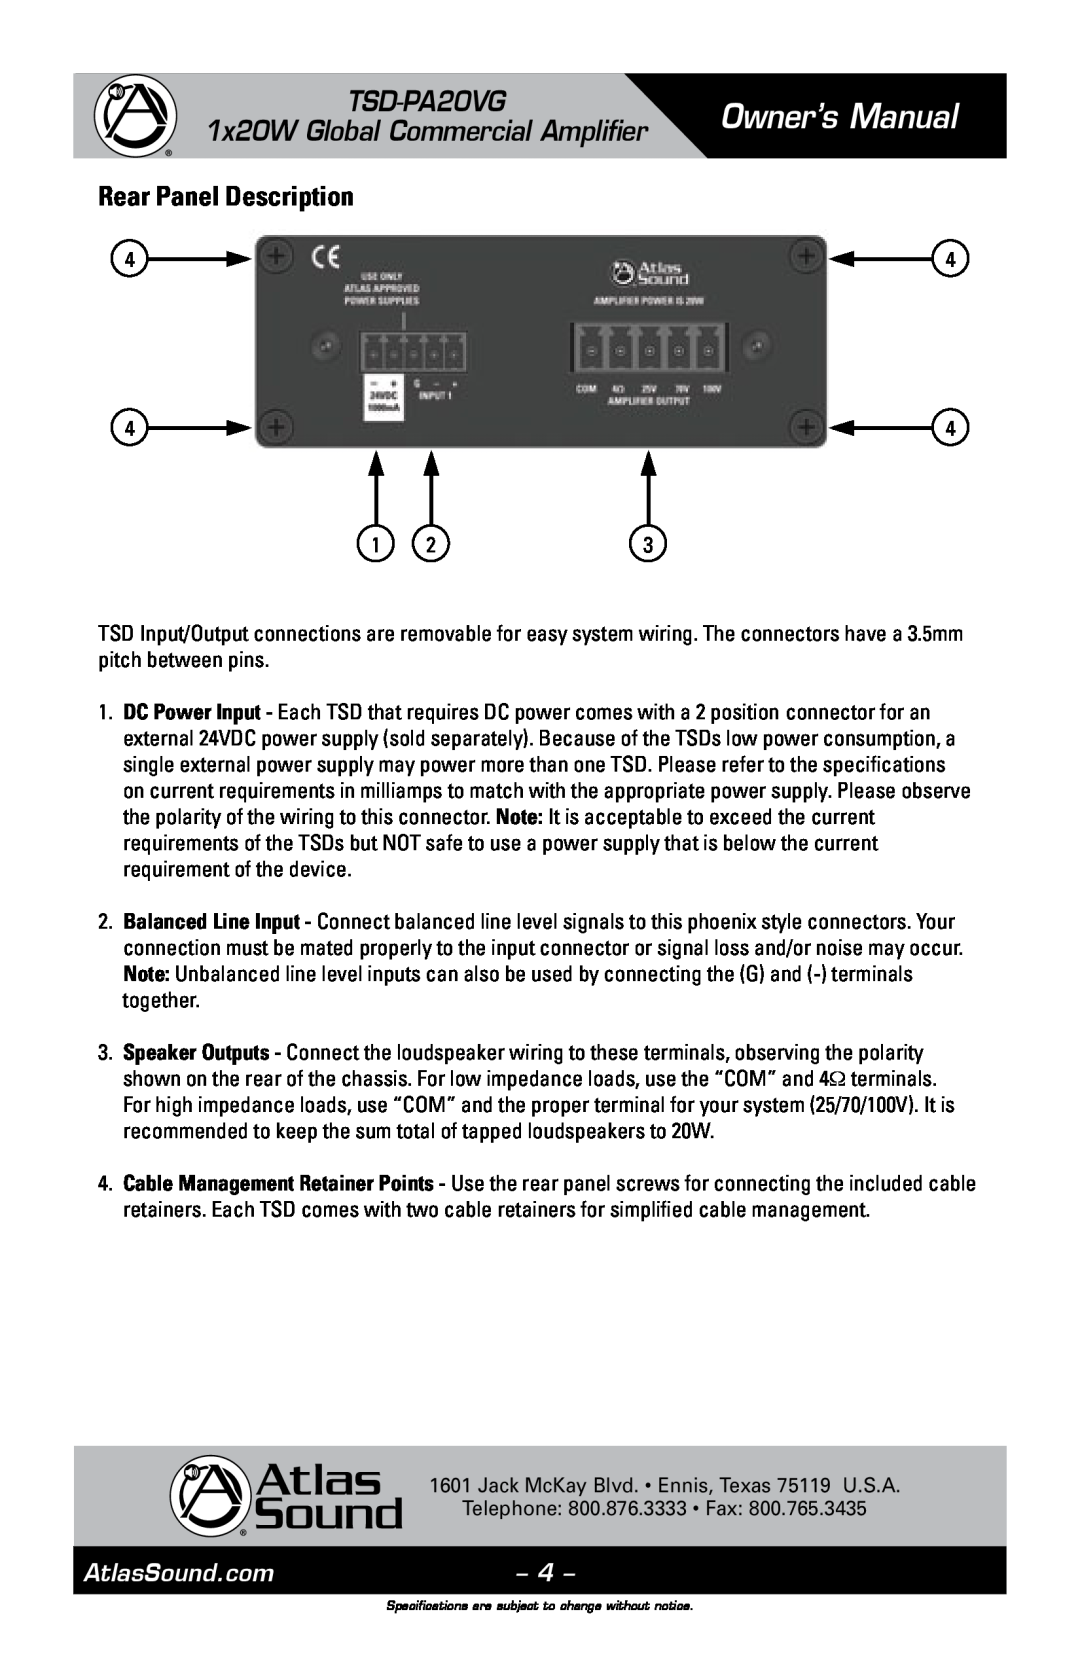 Atlas Sound Rear Panel Description, Owner’s Manual, TSD-PA20VG 1x20W Global Commercial Amplifier, AtlasSound.com 